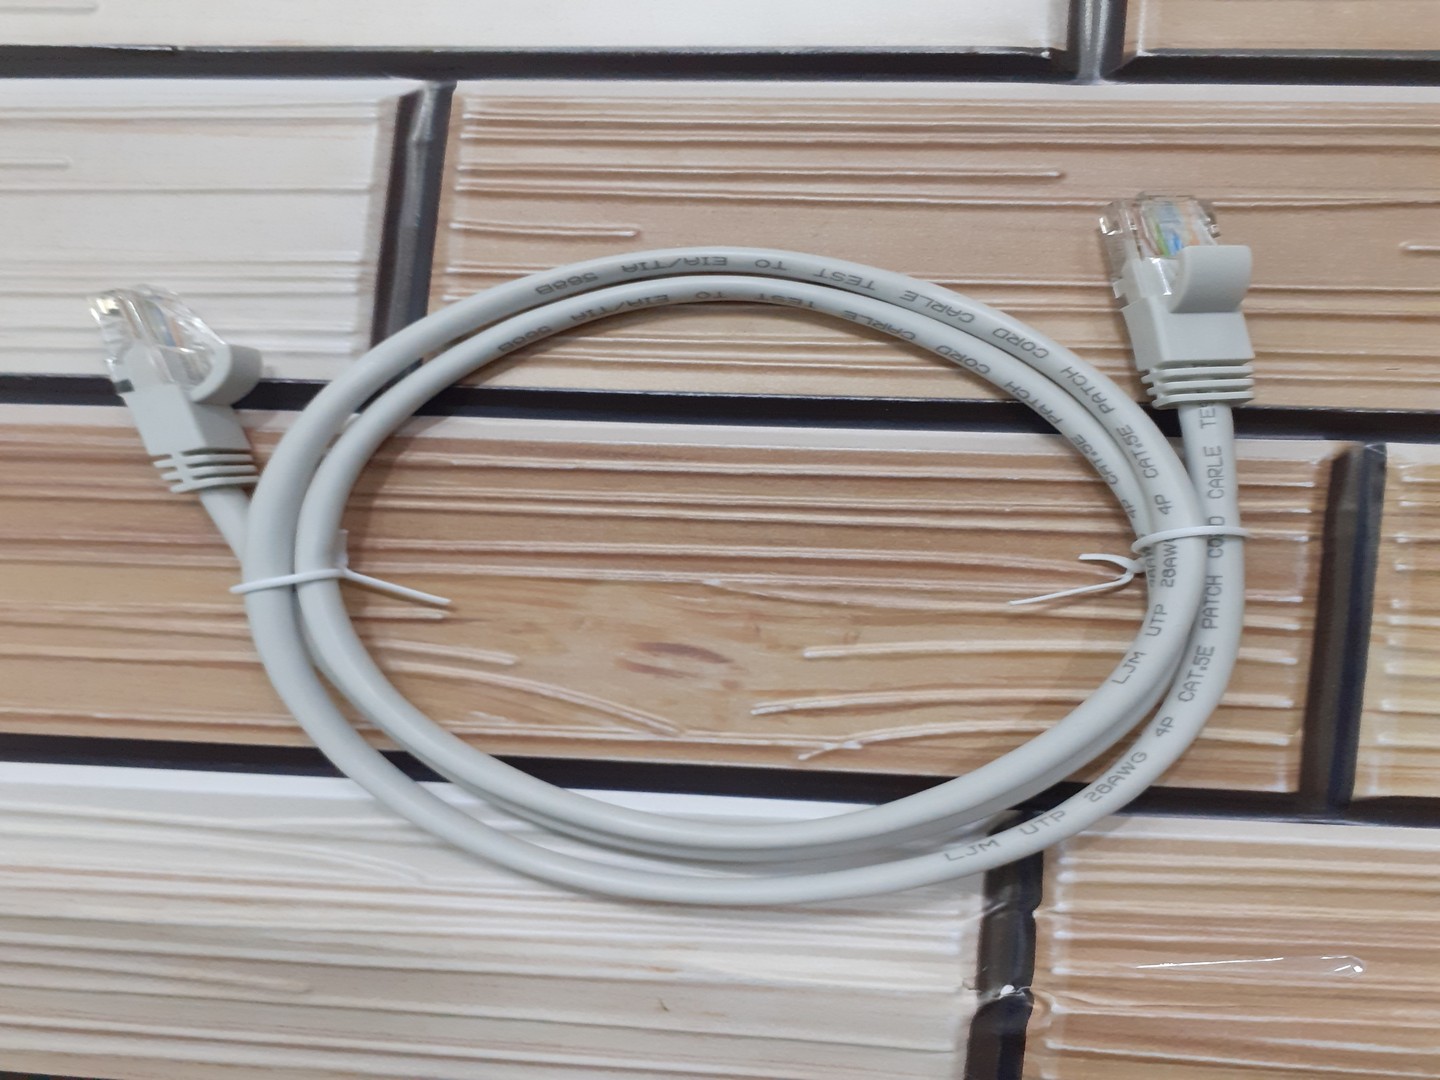 accesorios para electronica - Cable de red - Cable UTP Pacth Cord Categoría CAT5e 1M 3ft 2